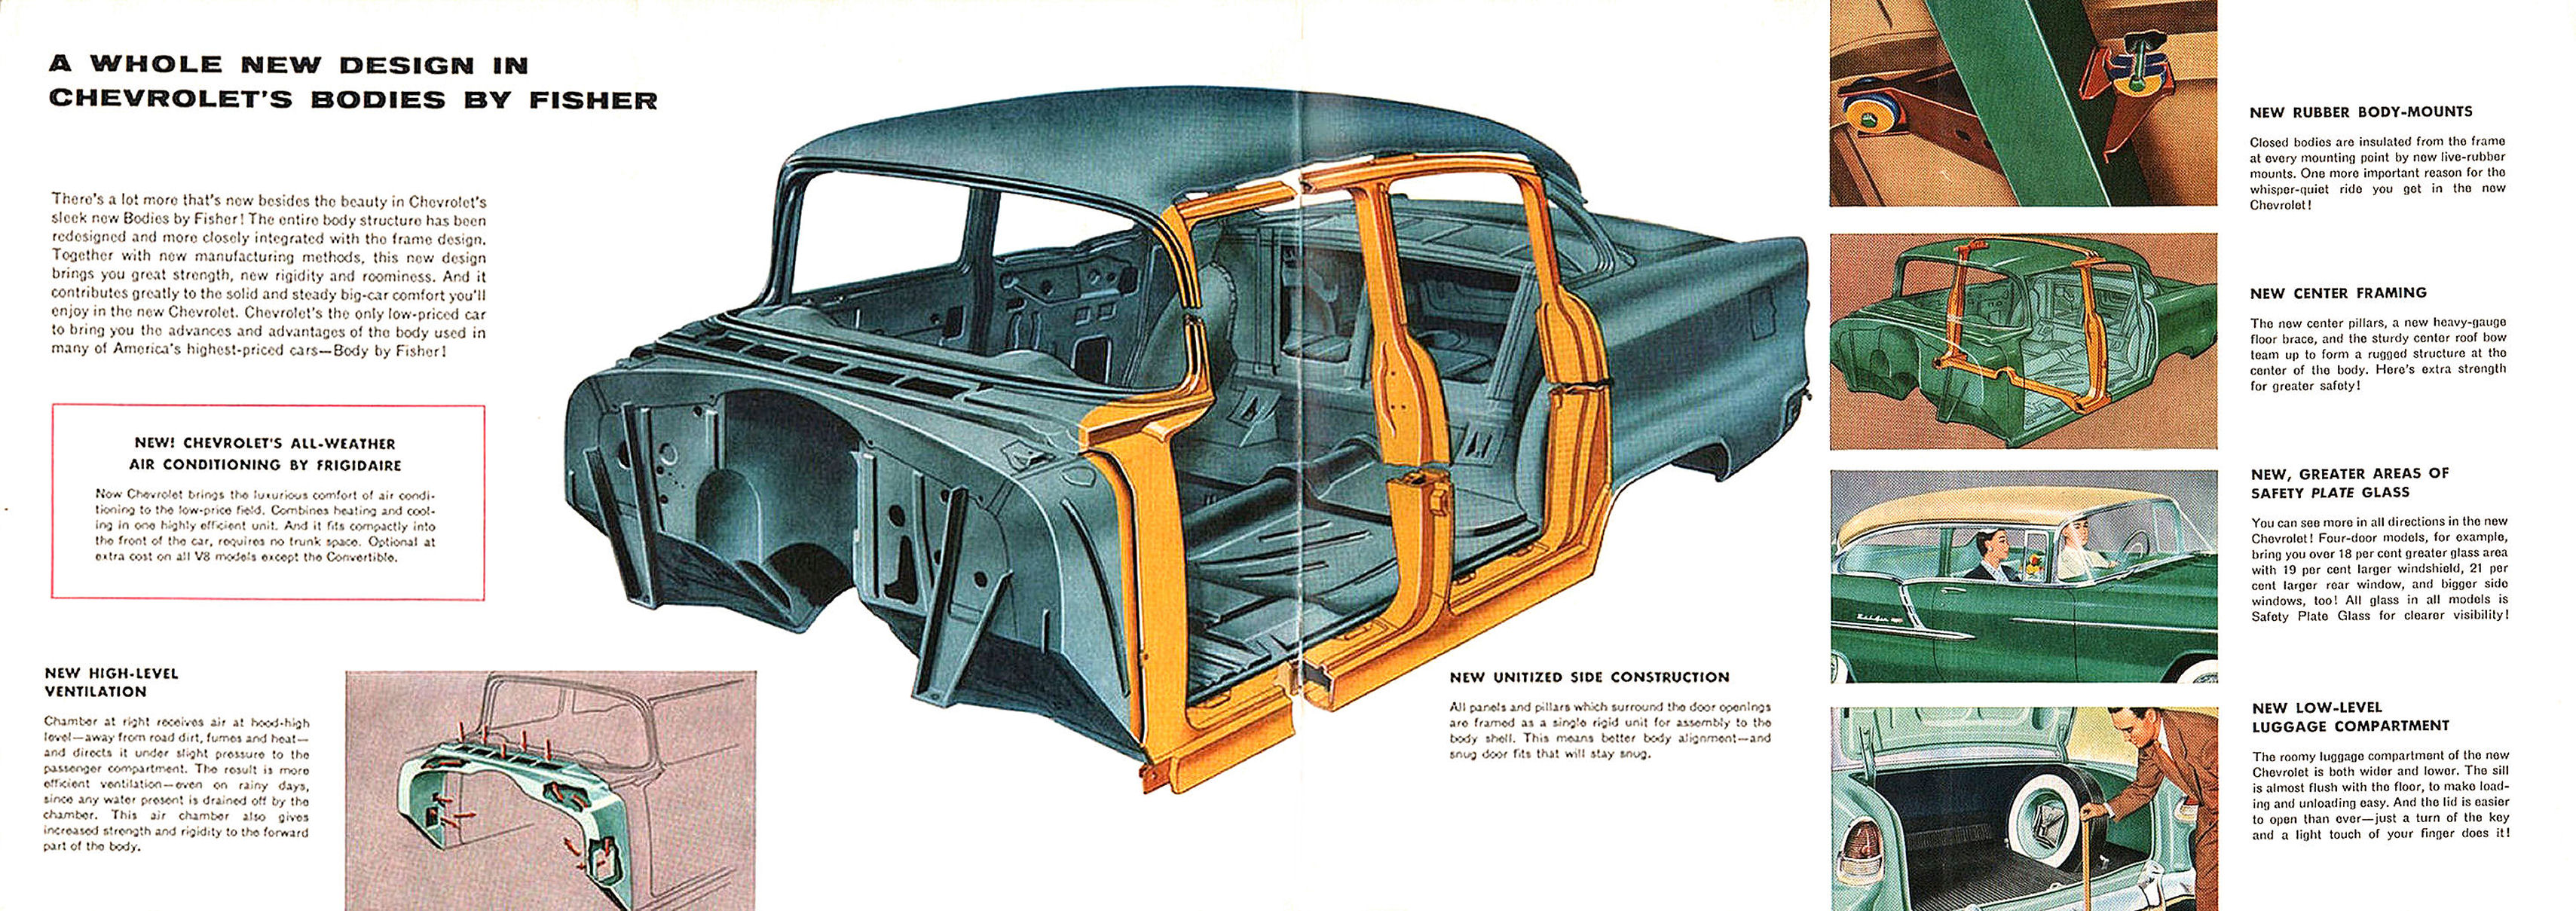 1955_Chevrolet_Full_Line_y-16-17